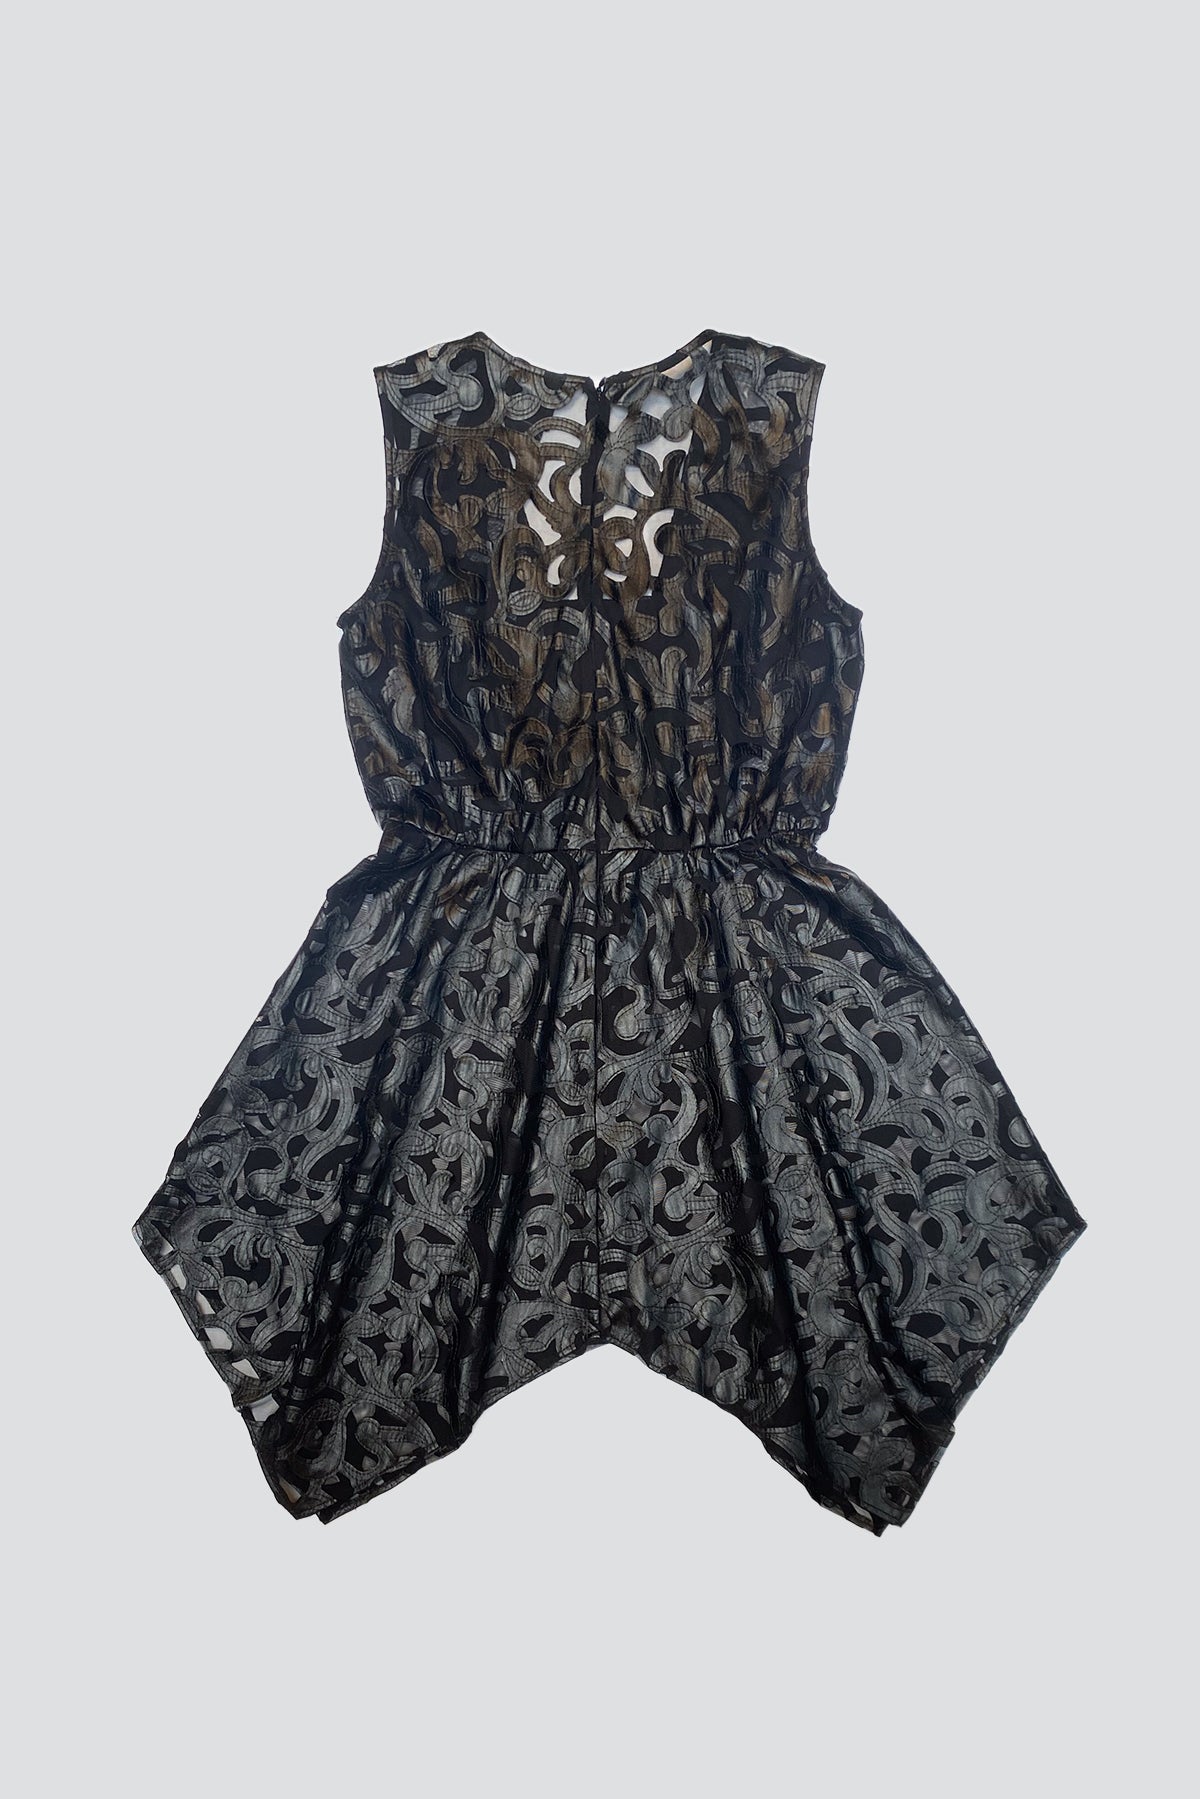 Anna Sui Grunge Paisley Dress